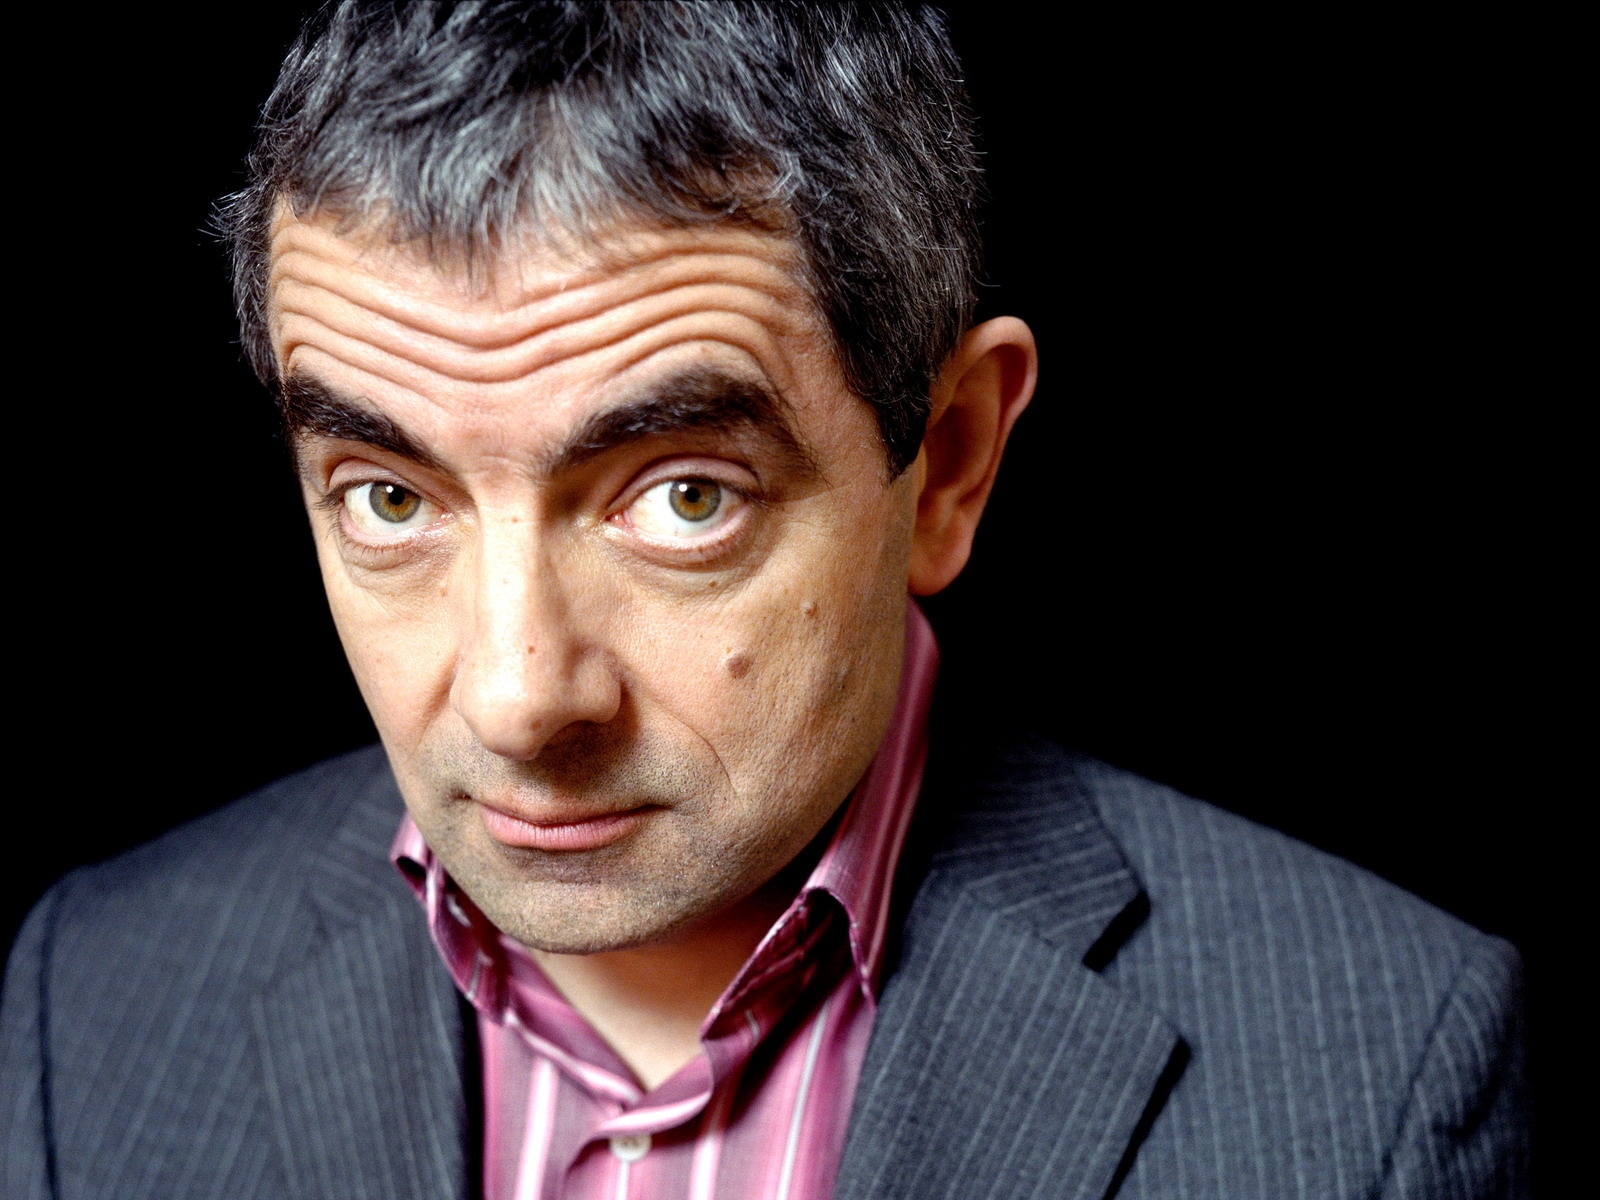 Wallpaper, face, portrait, actor, Gentleman, Person, Comedian, head, Rowan Atkinson, Mr Bean, man, star, male 1600x1200